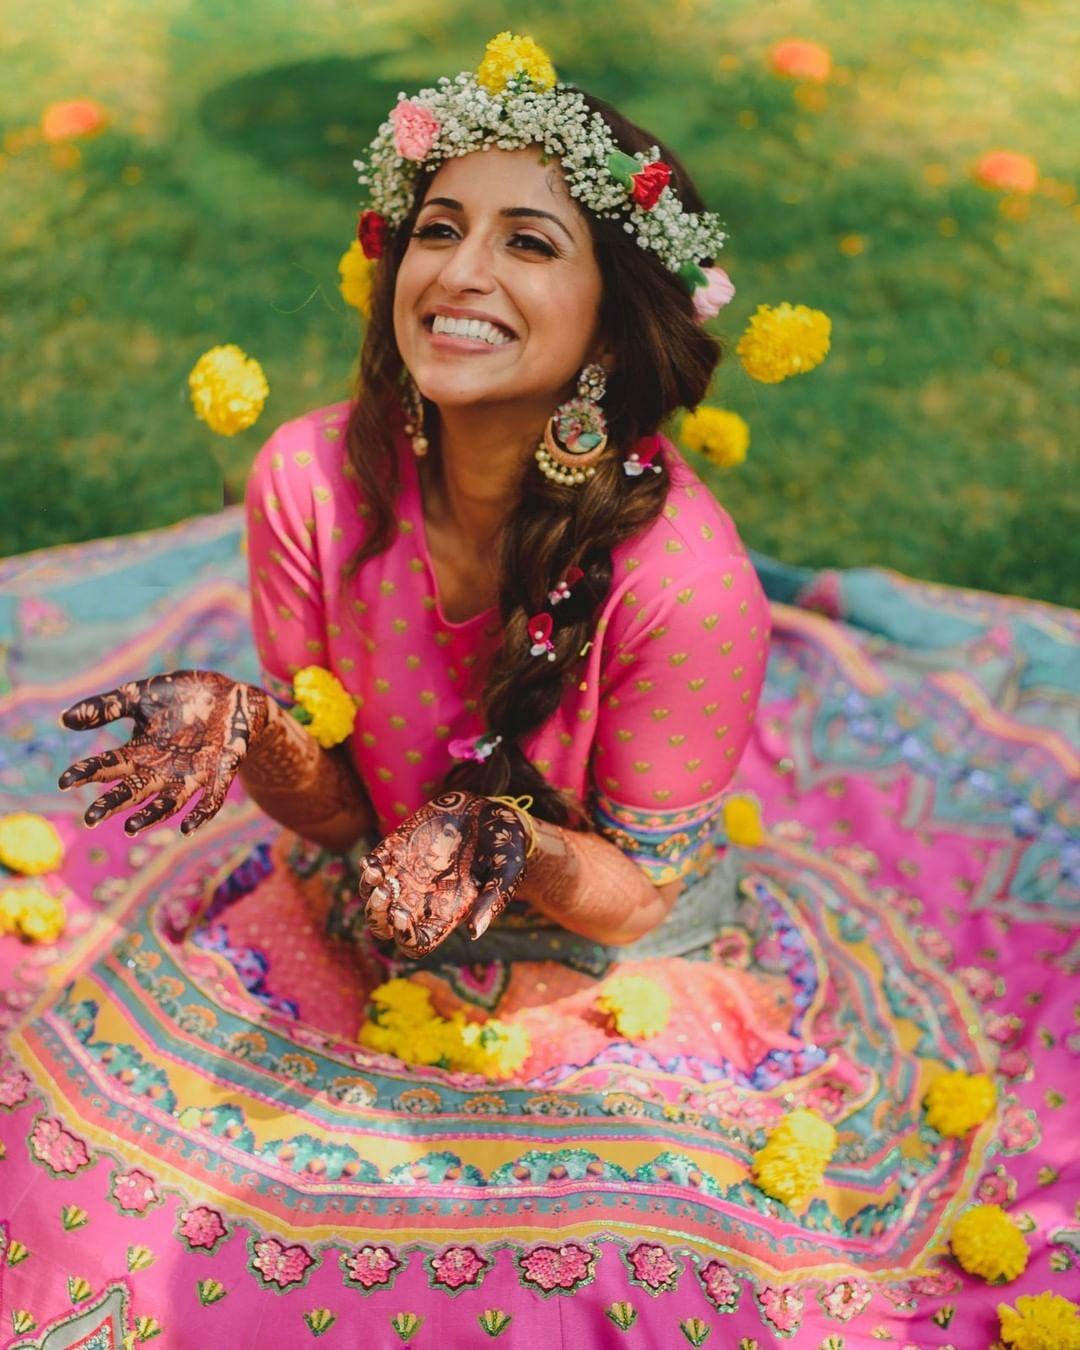 Floral hairstyles for Haldi and Mehendi Ceremonies! - K4 Fashion | Indian  wedding hairstyles, Trendy wedding hairstyles, Flowers in hair